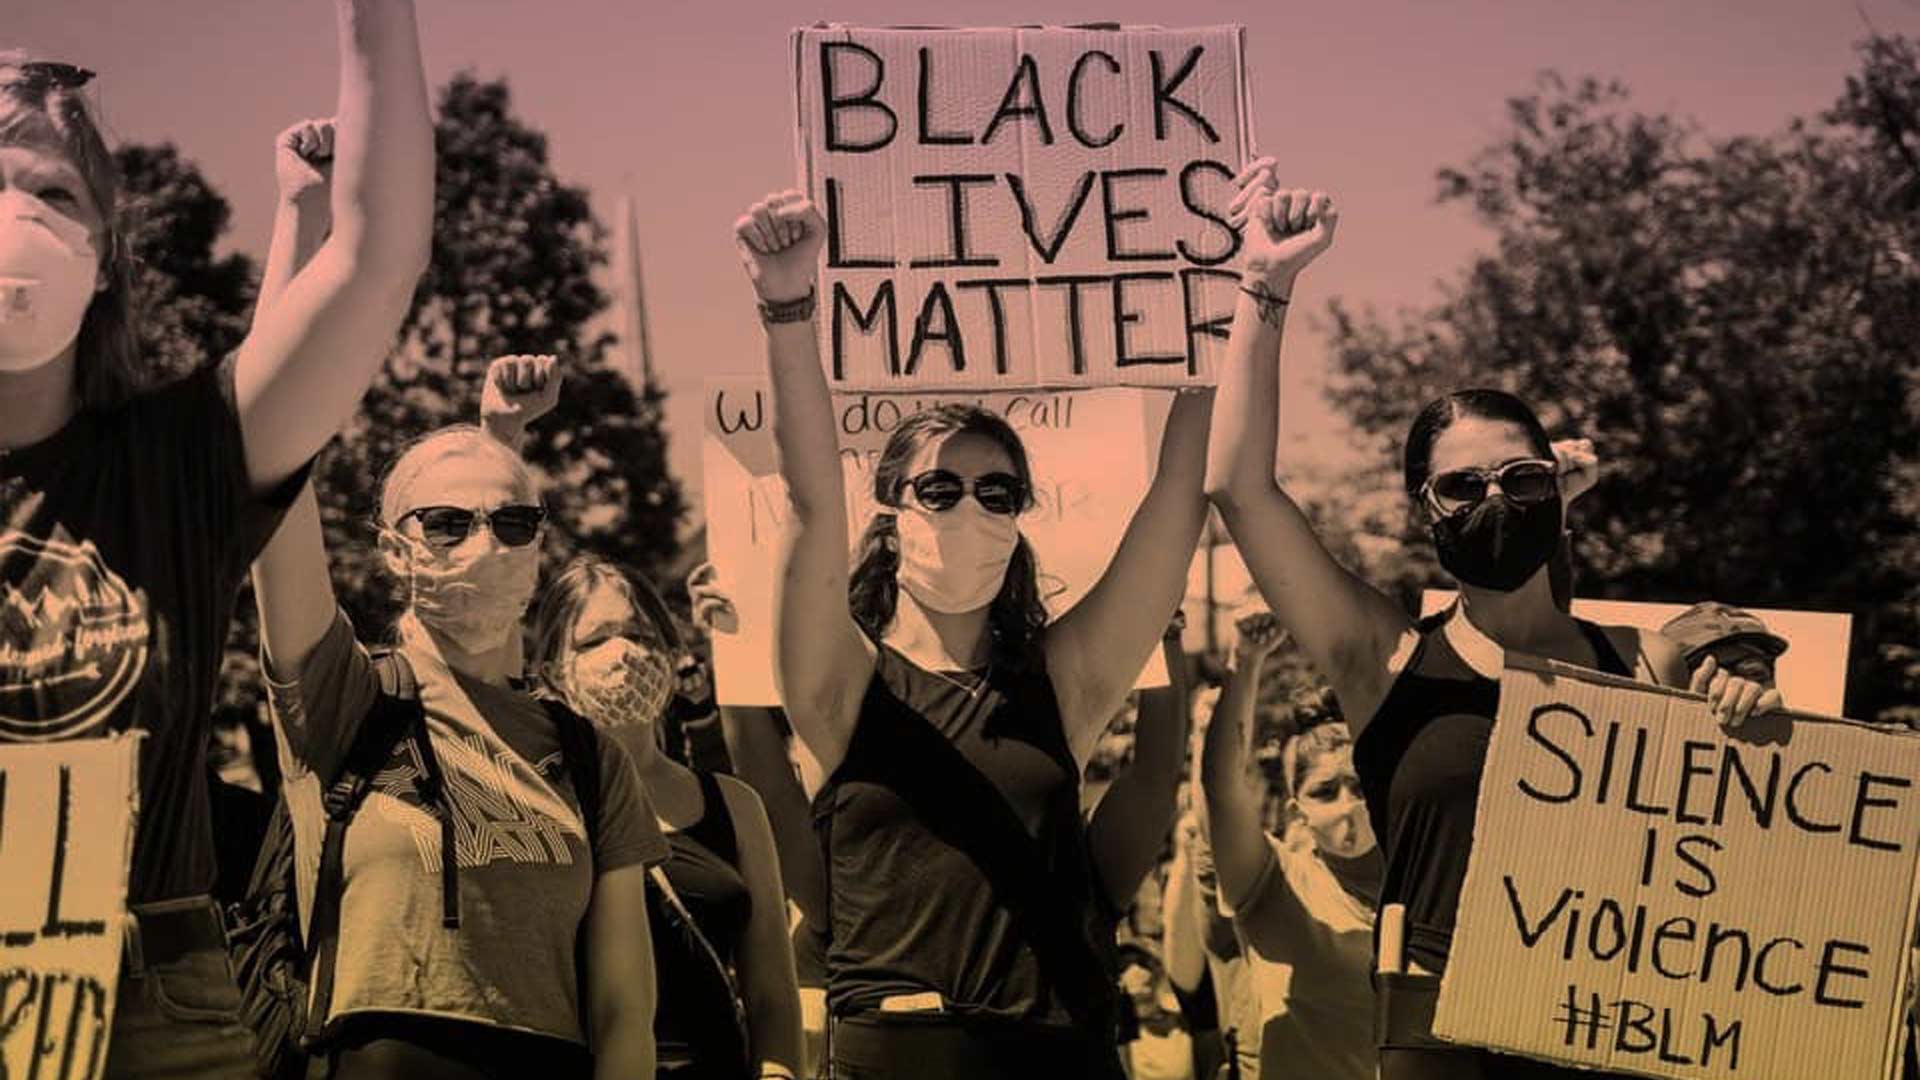 Black lives matter pic